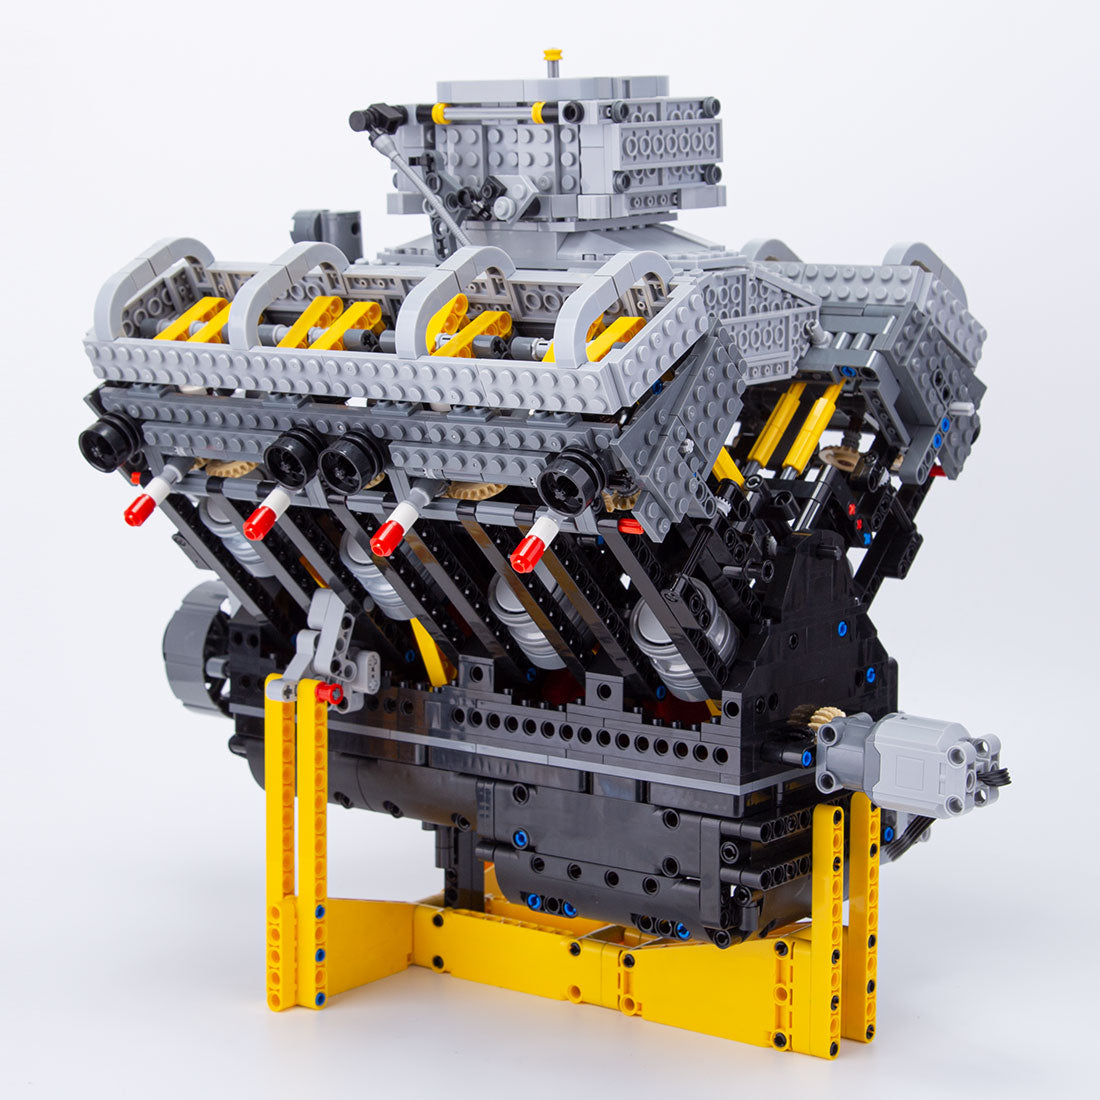 Chevy Small Block  V8 Engine General Motors MOC Engine Model Building Blocks Toy Set - 2362PCS - Build Your Own V8 Engine enginediyshop